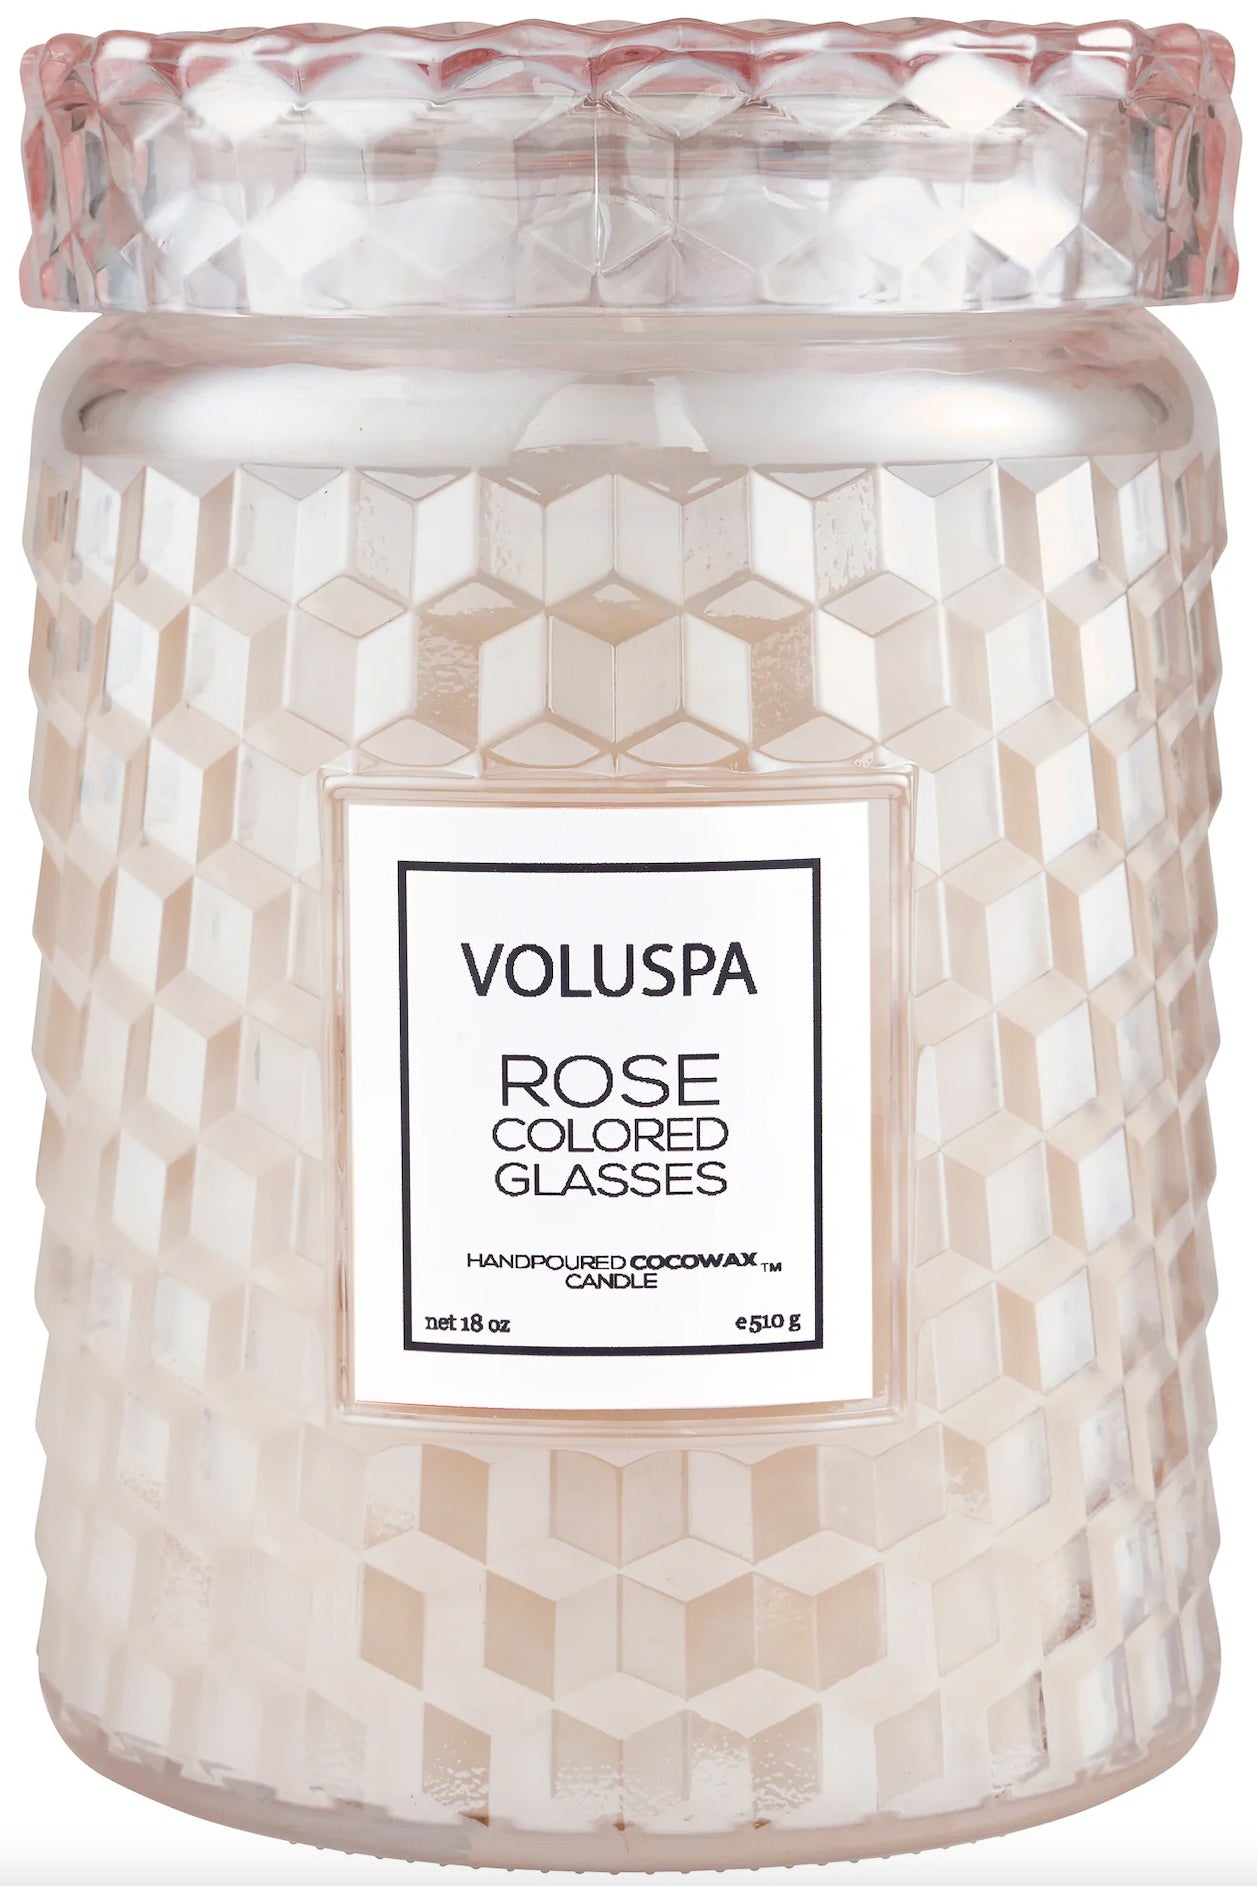 Voluspa Large Glass Jar Candle - 18 oz - ROSE COLORED GLASSES